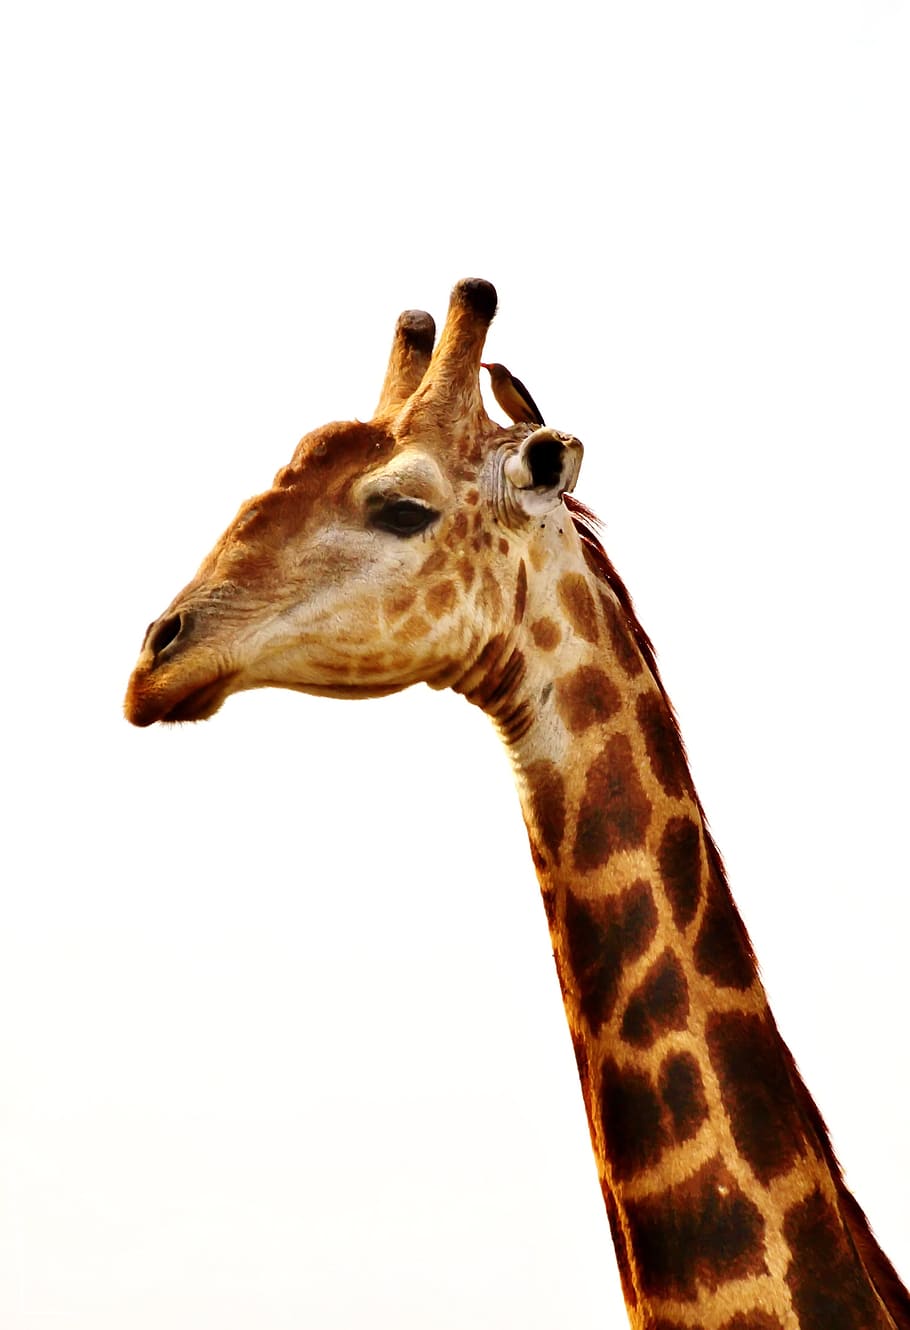 Marrón, cabeza de jirafa, blanco, superficie, jirafa, cuello, animal, cuello de jirafa, animal salvaje, retrato